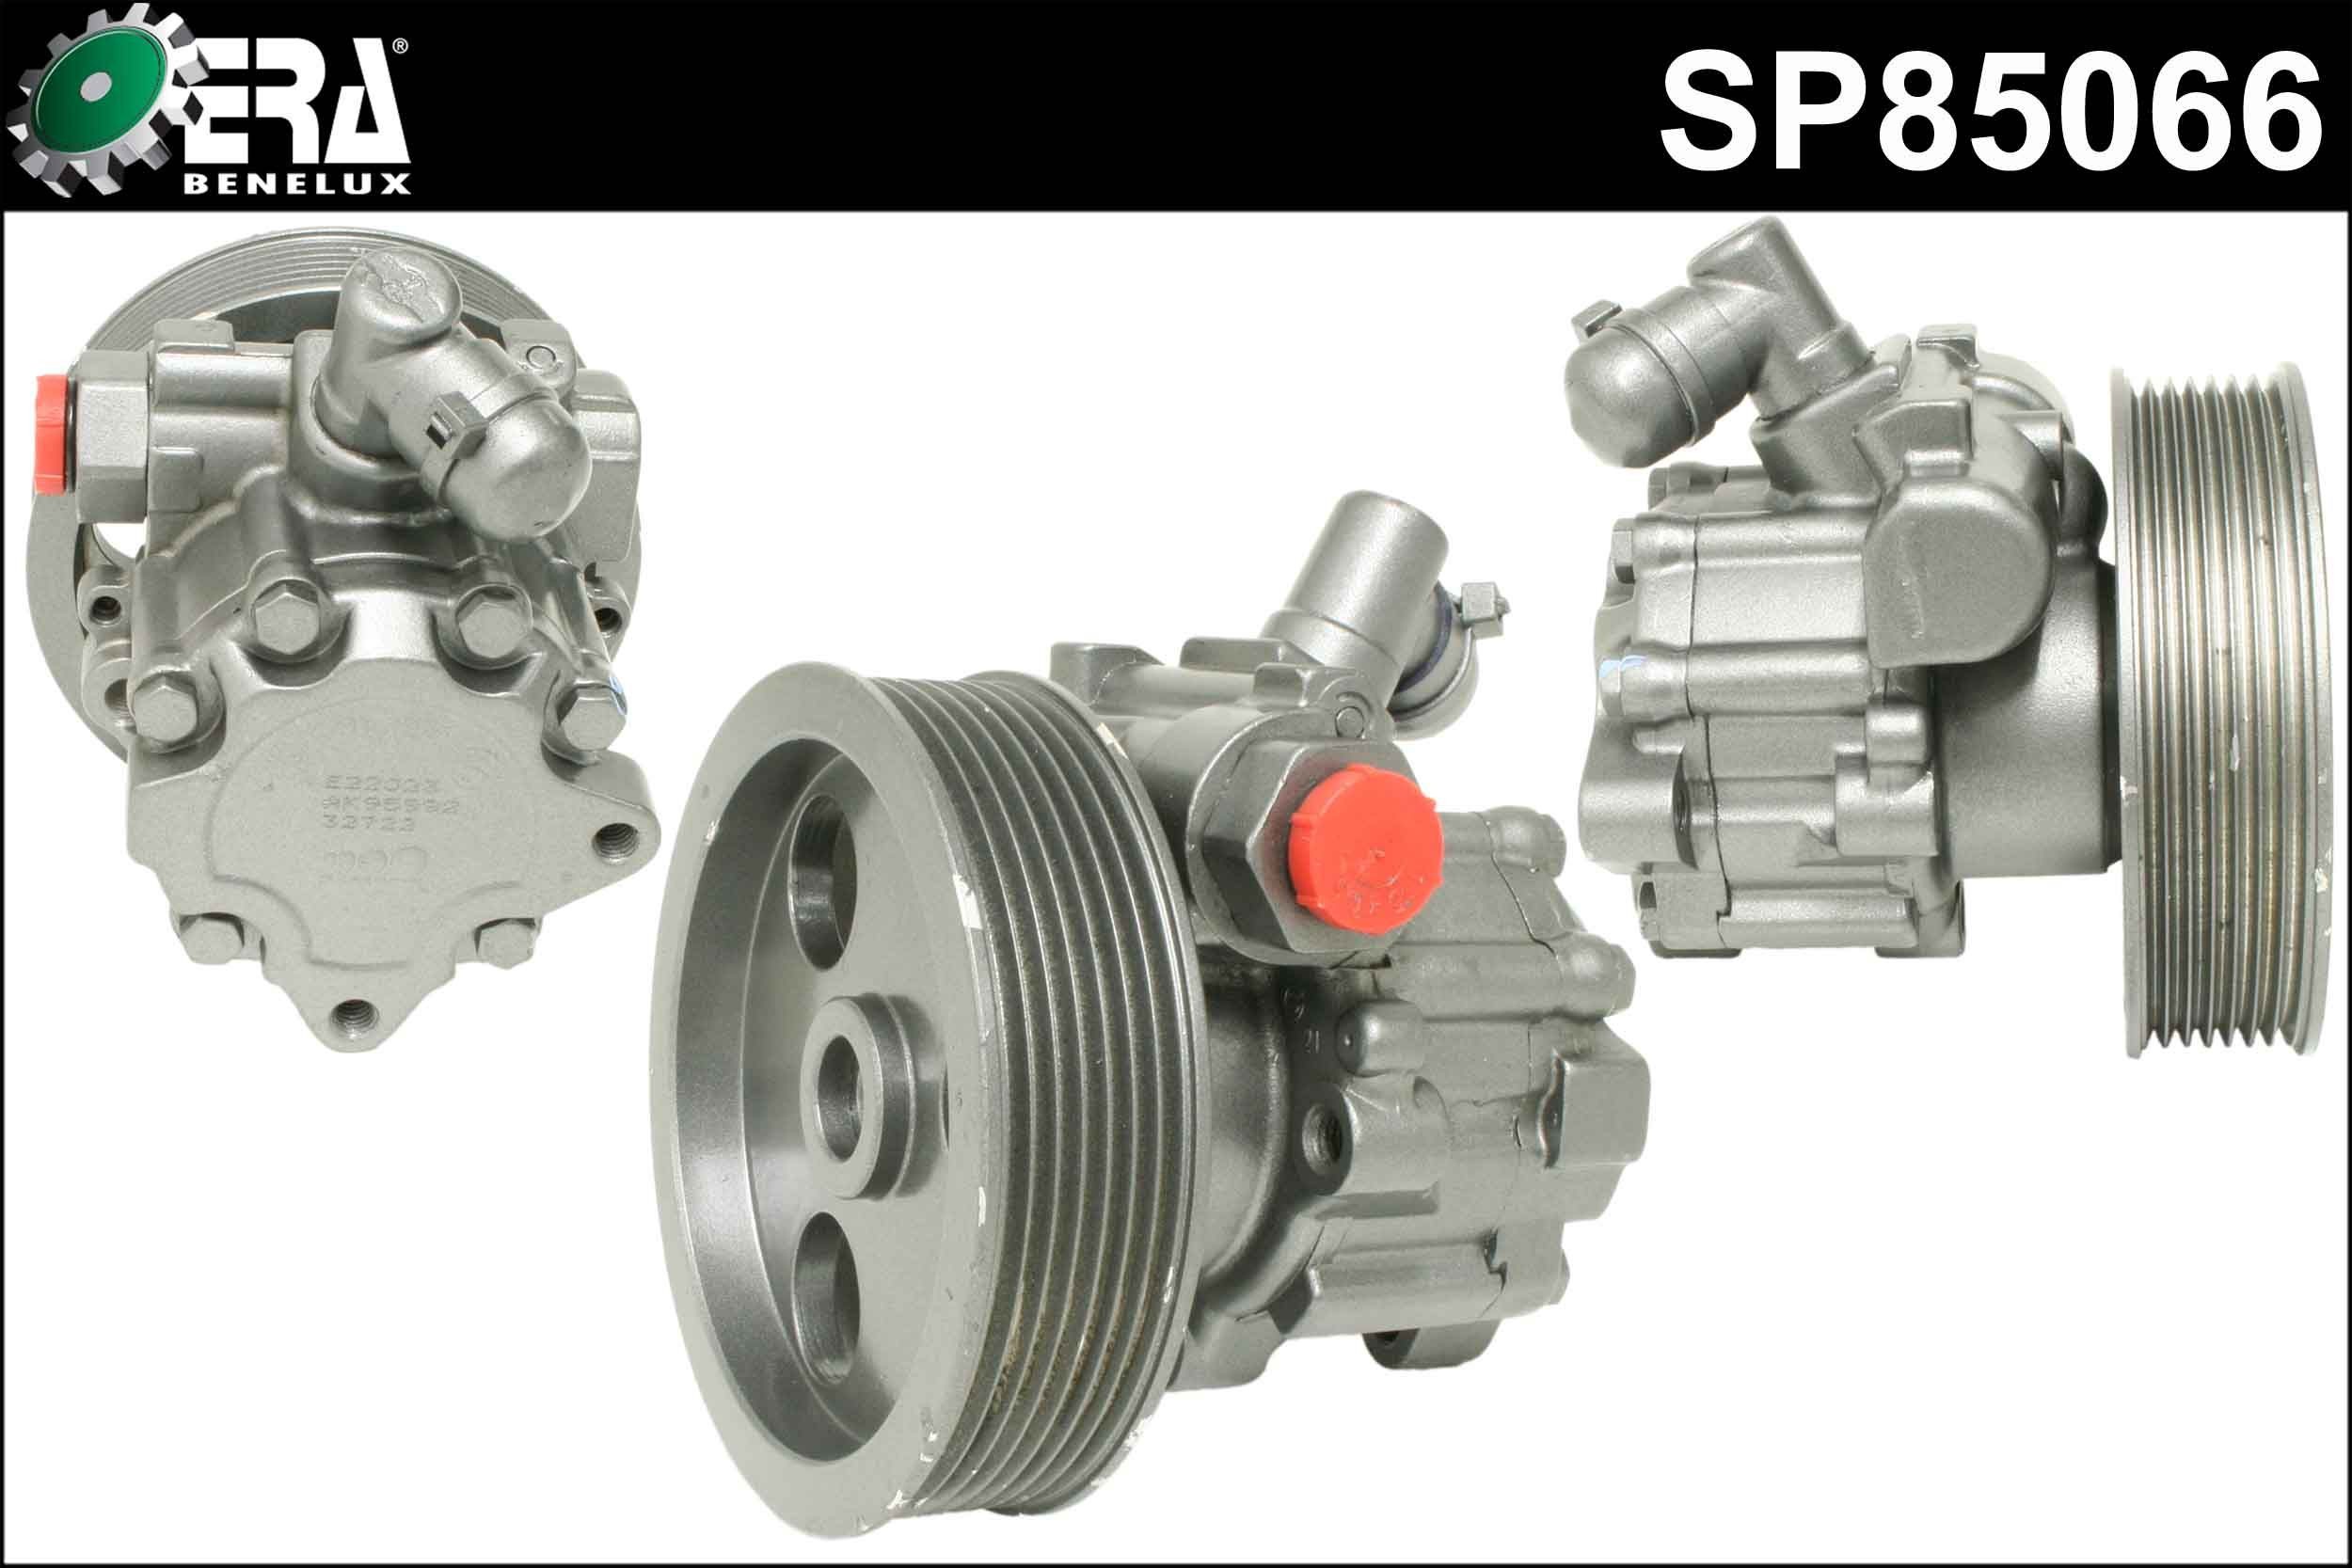 ERA Benelux SP85066 Power steering pump A005 466 02 01